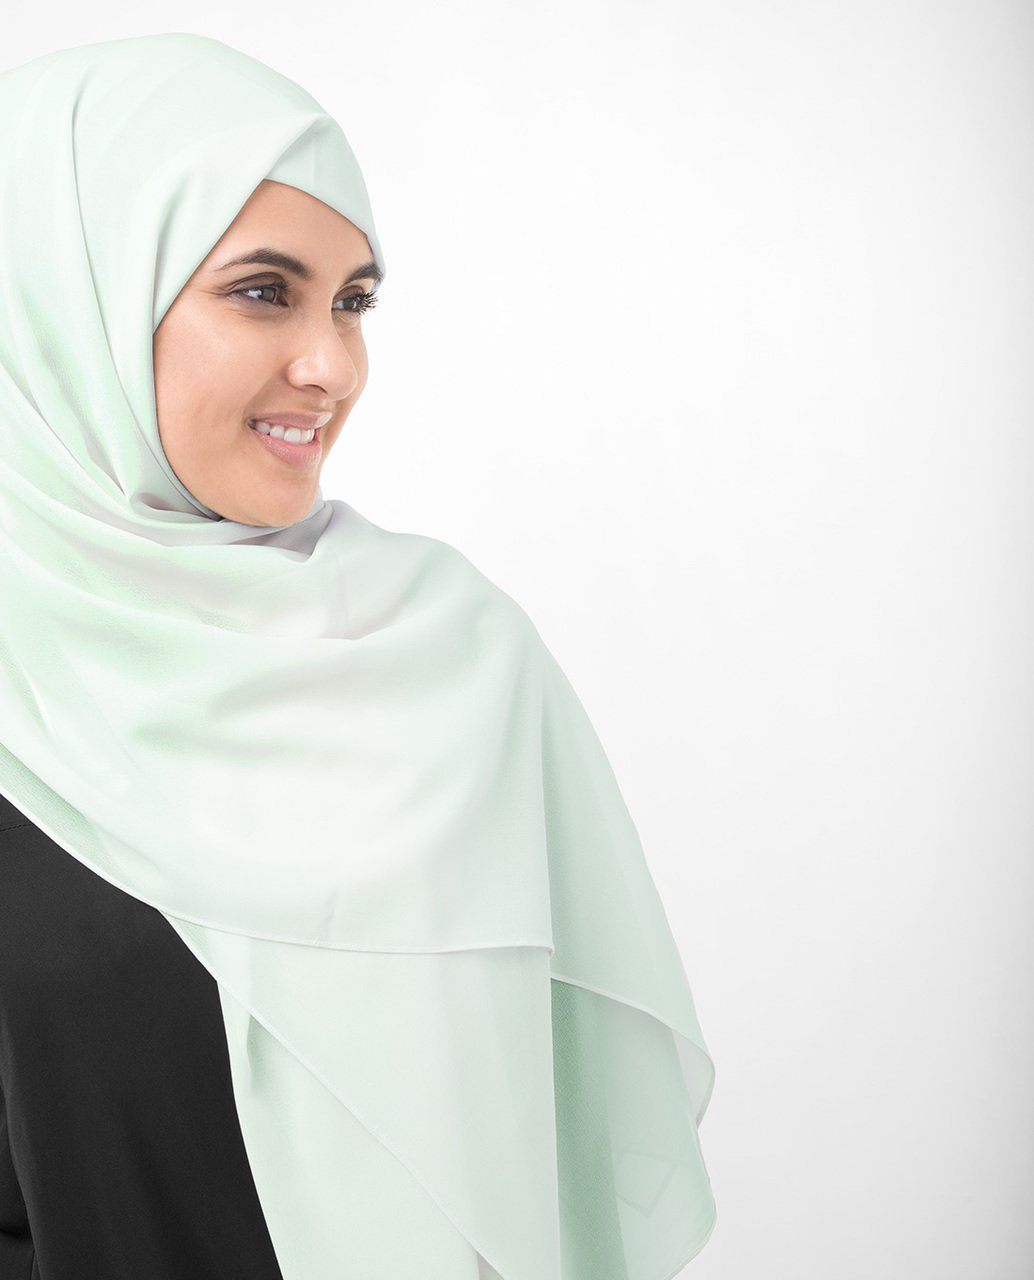 Shop for Georgette Hijab Scarf in Fairest Jade Green - ModestPath.com